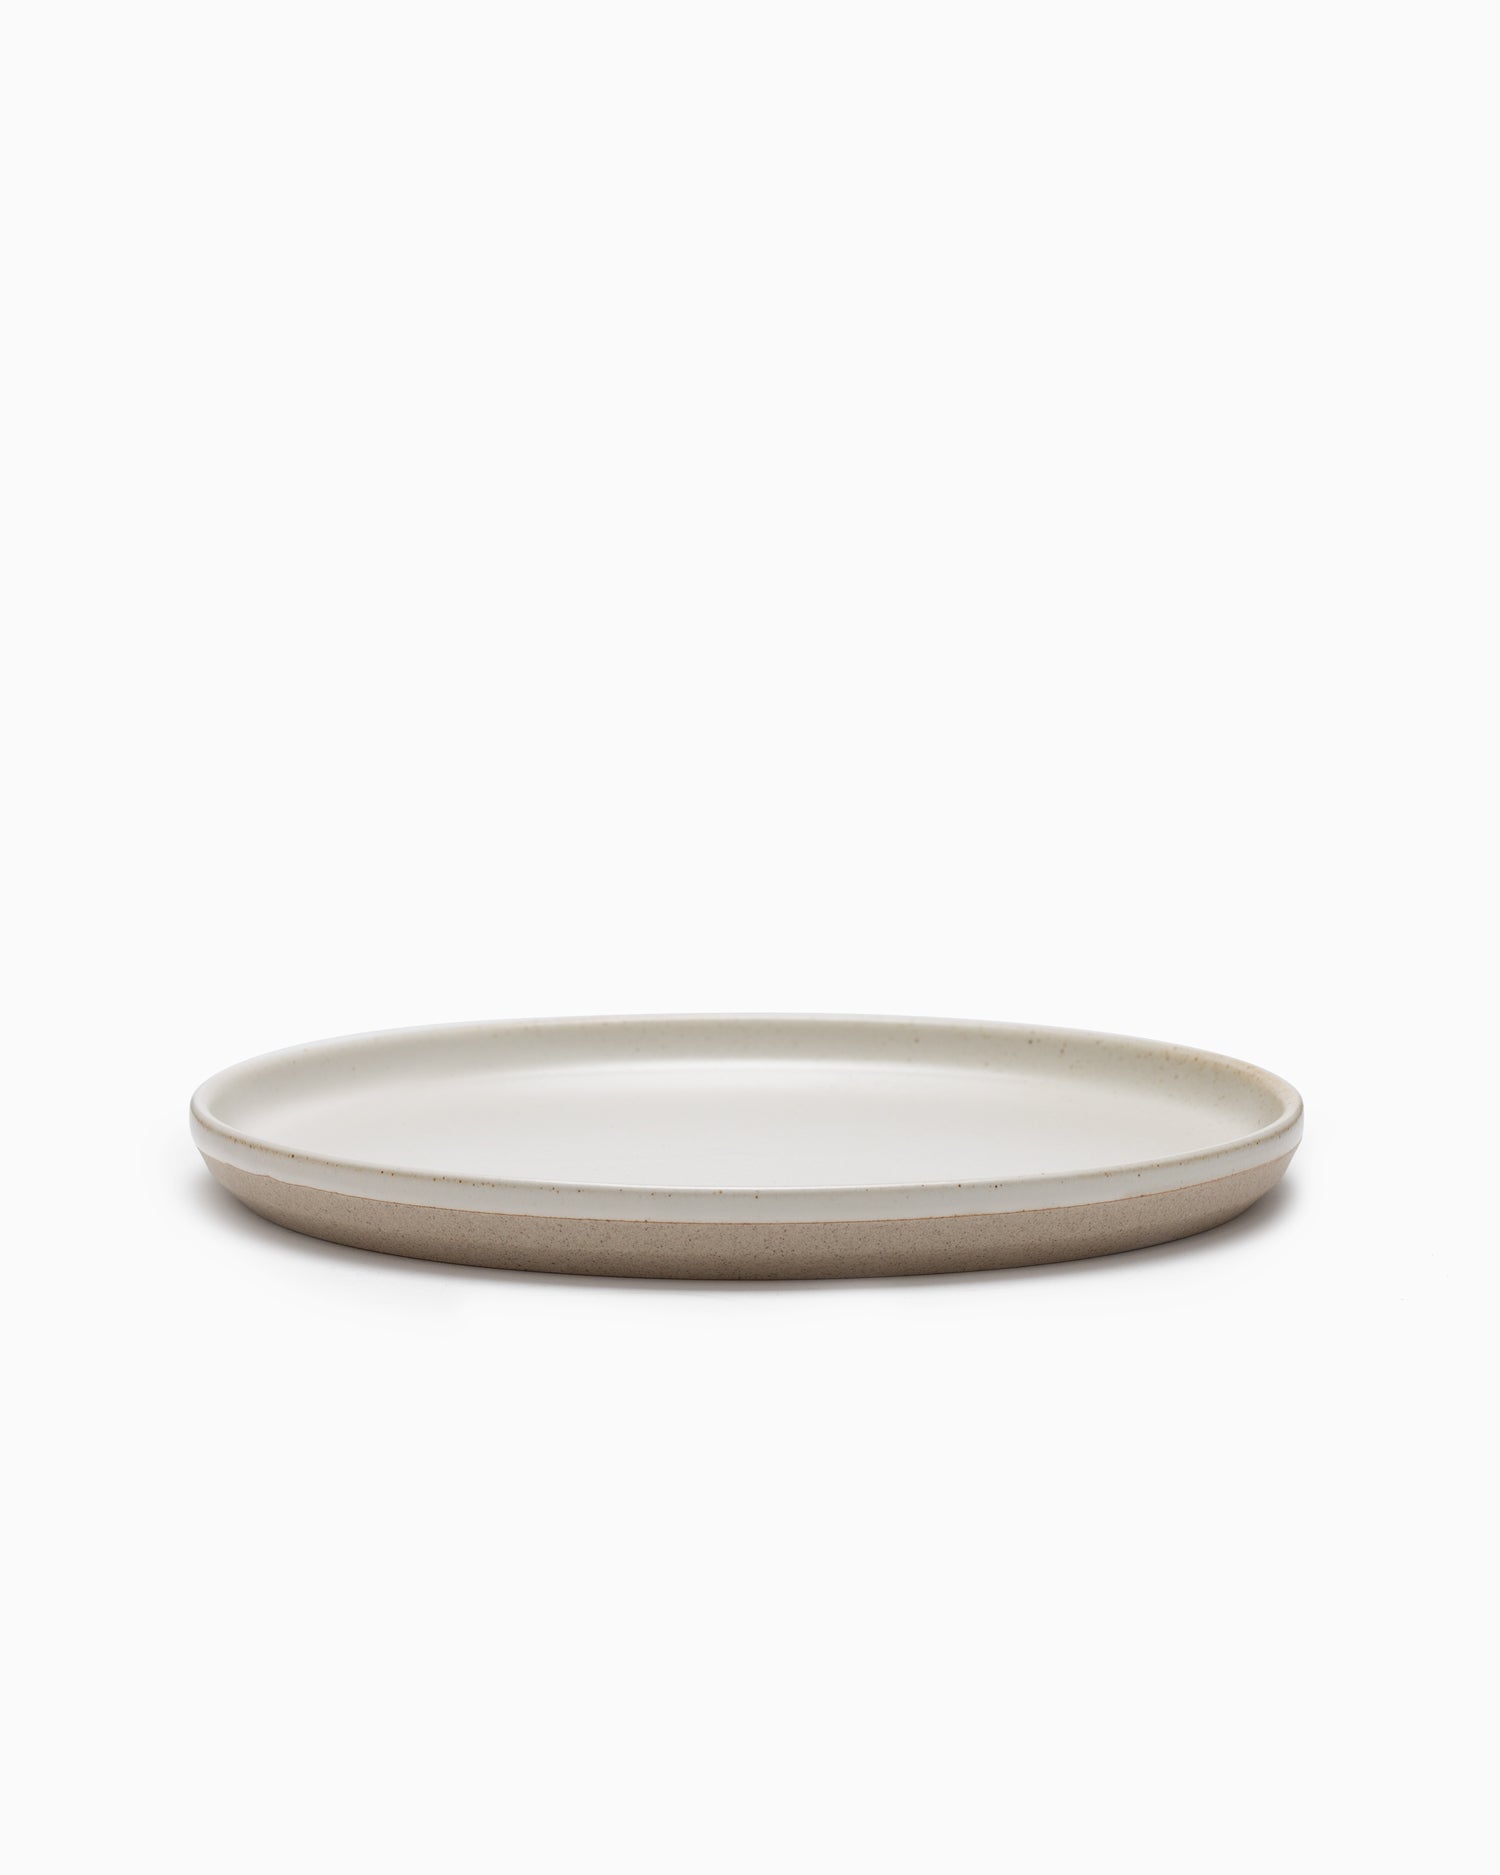 CLK-151 Medium Plate - White